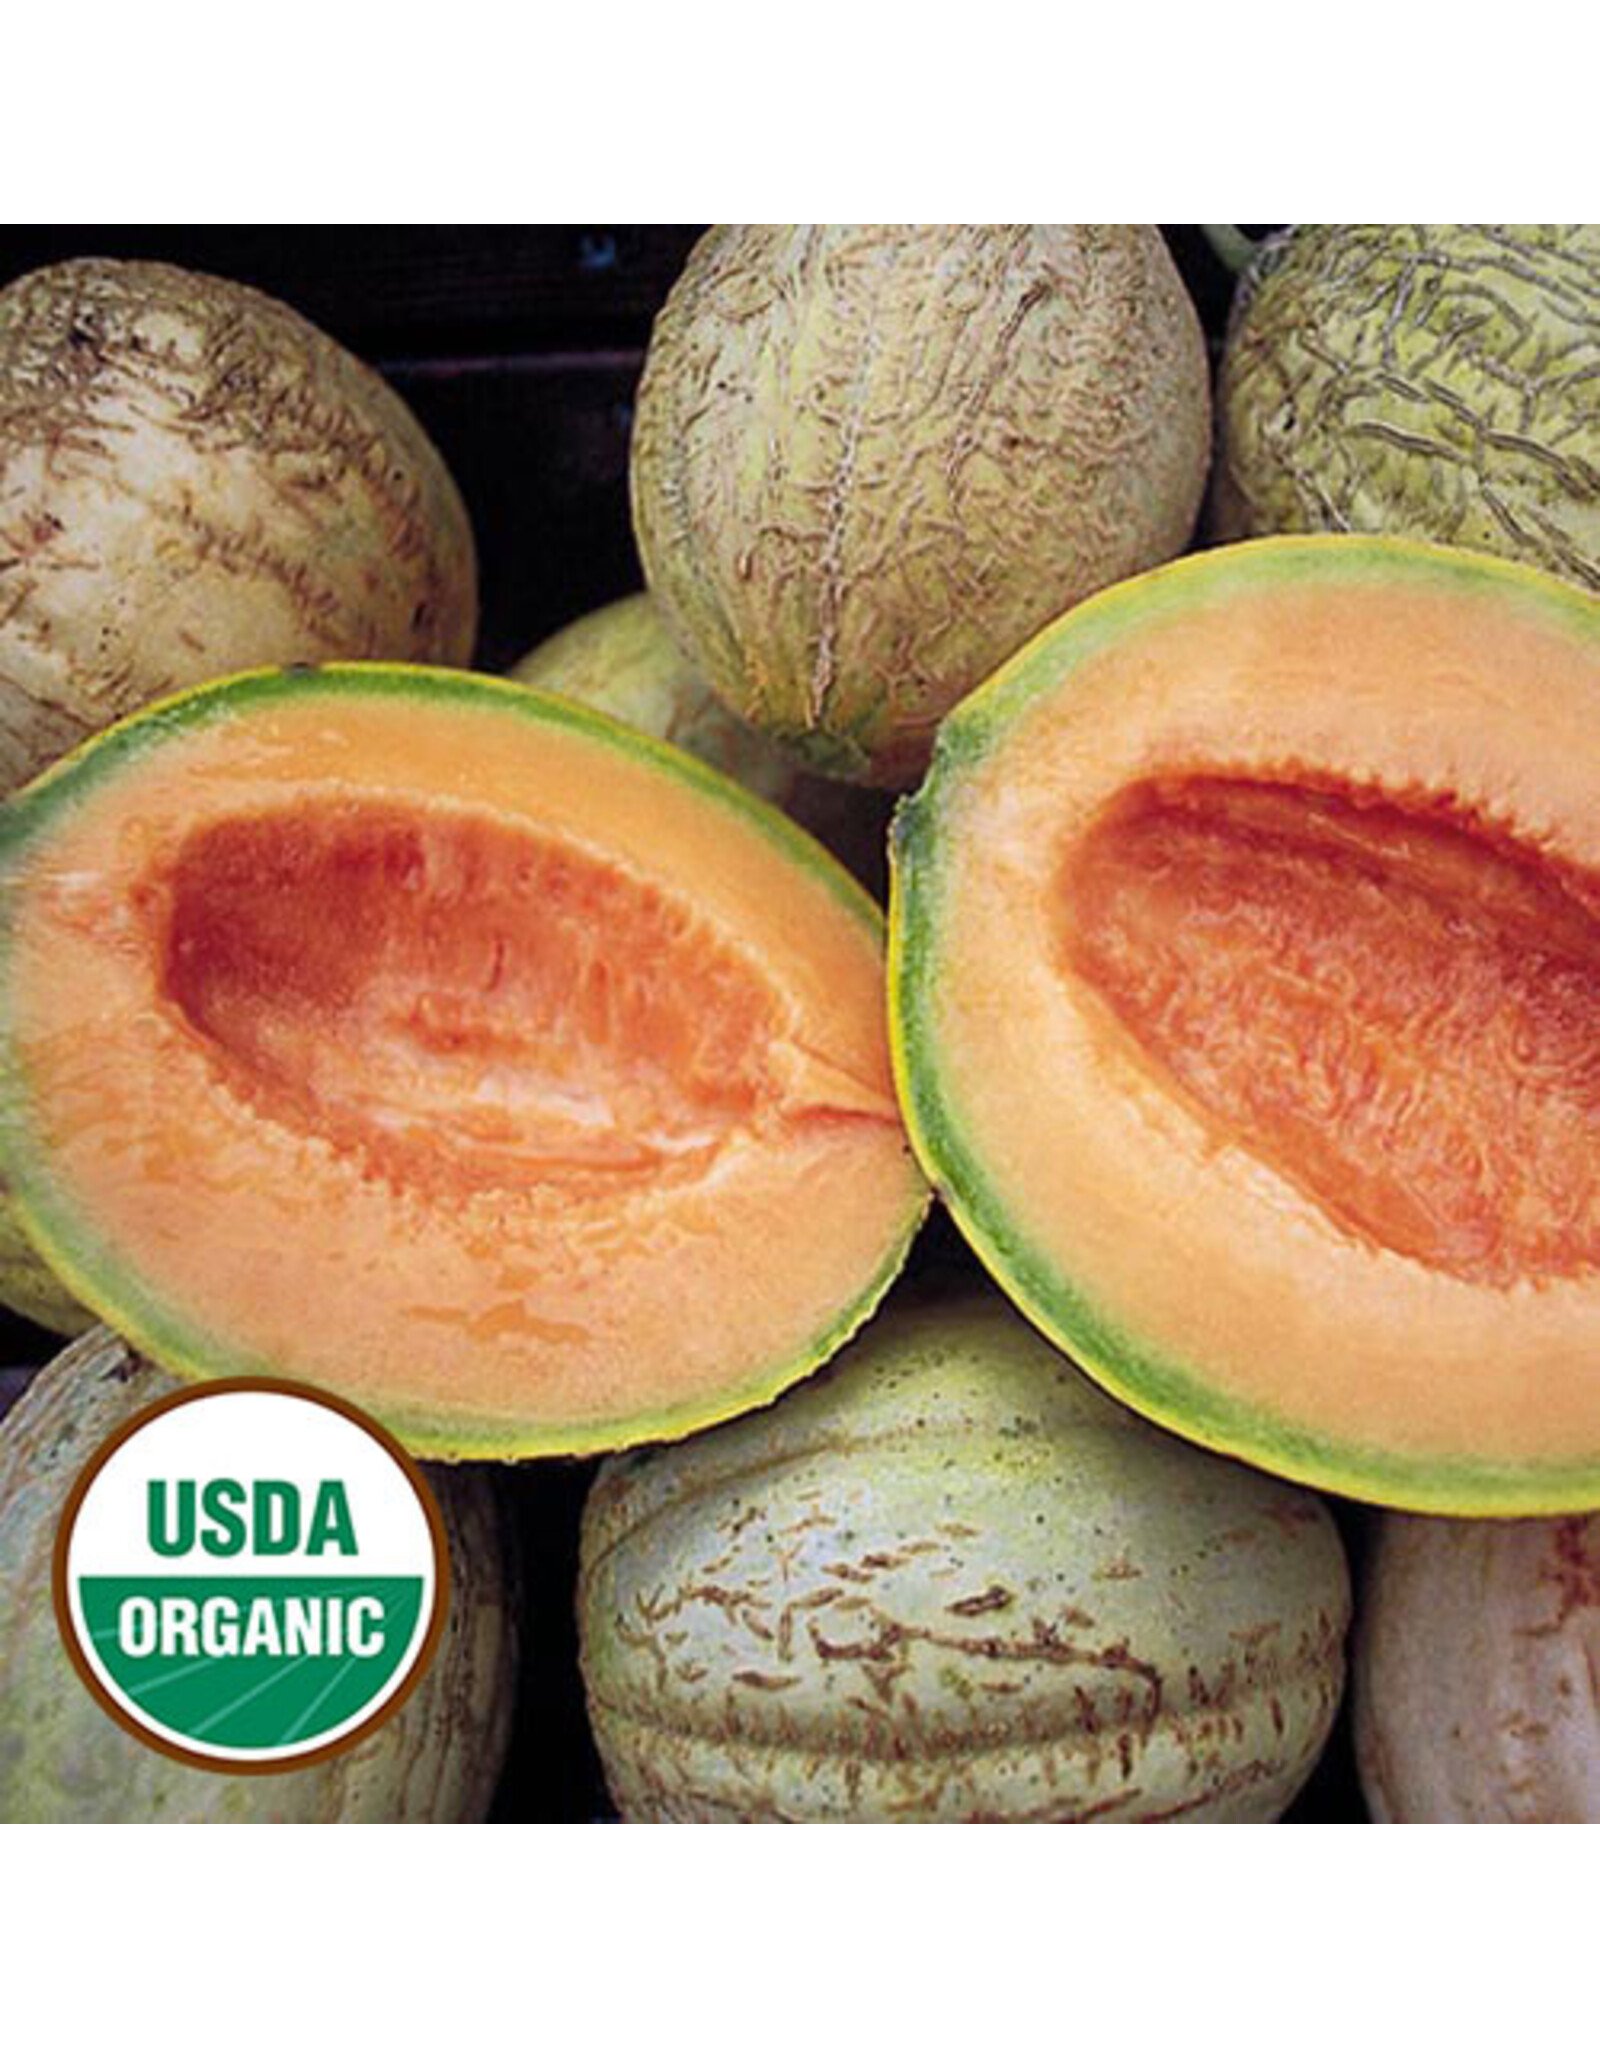 Seed Savers Melon - Amish (organic)